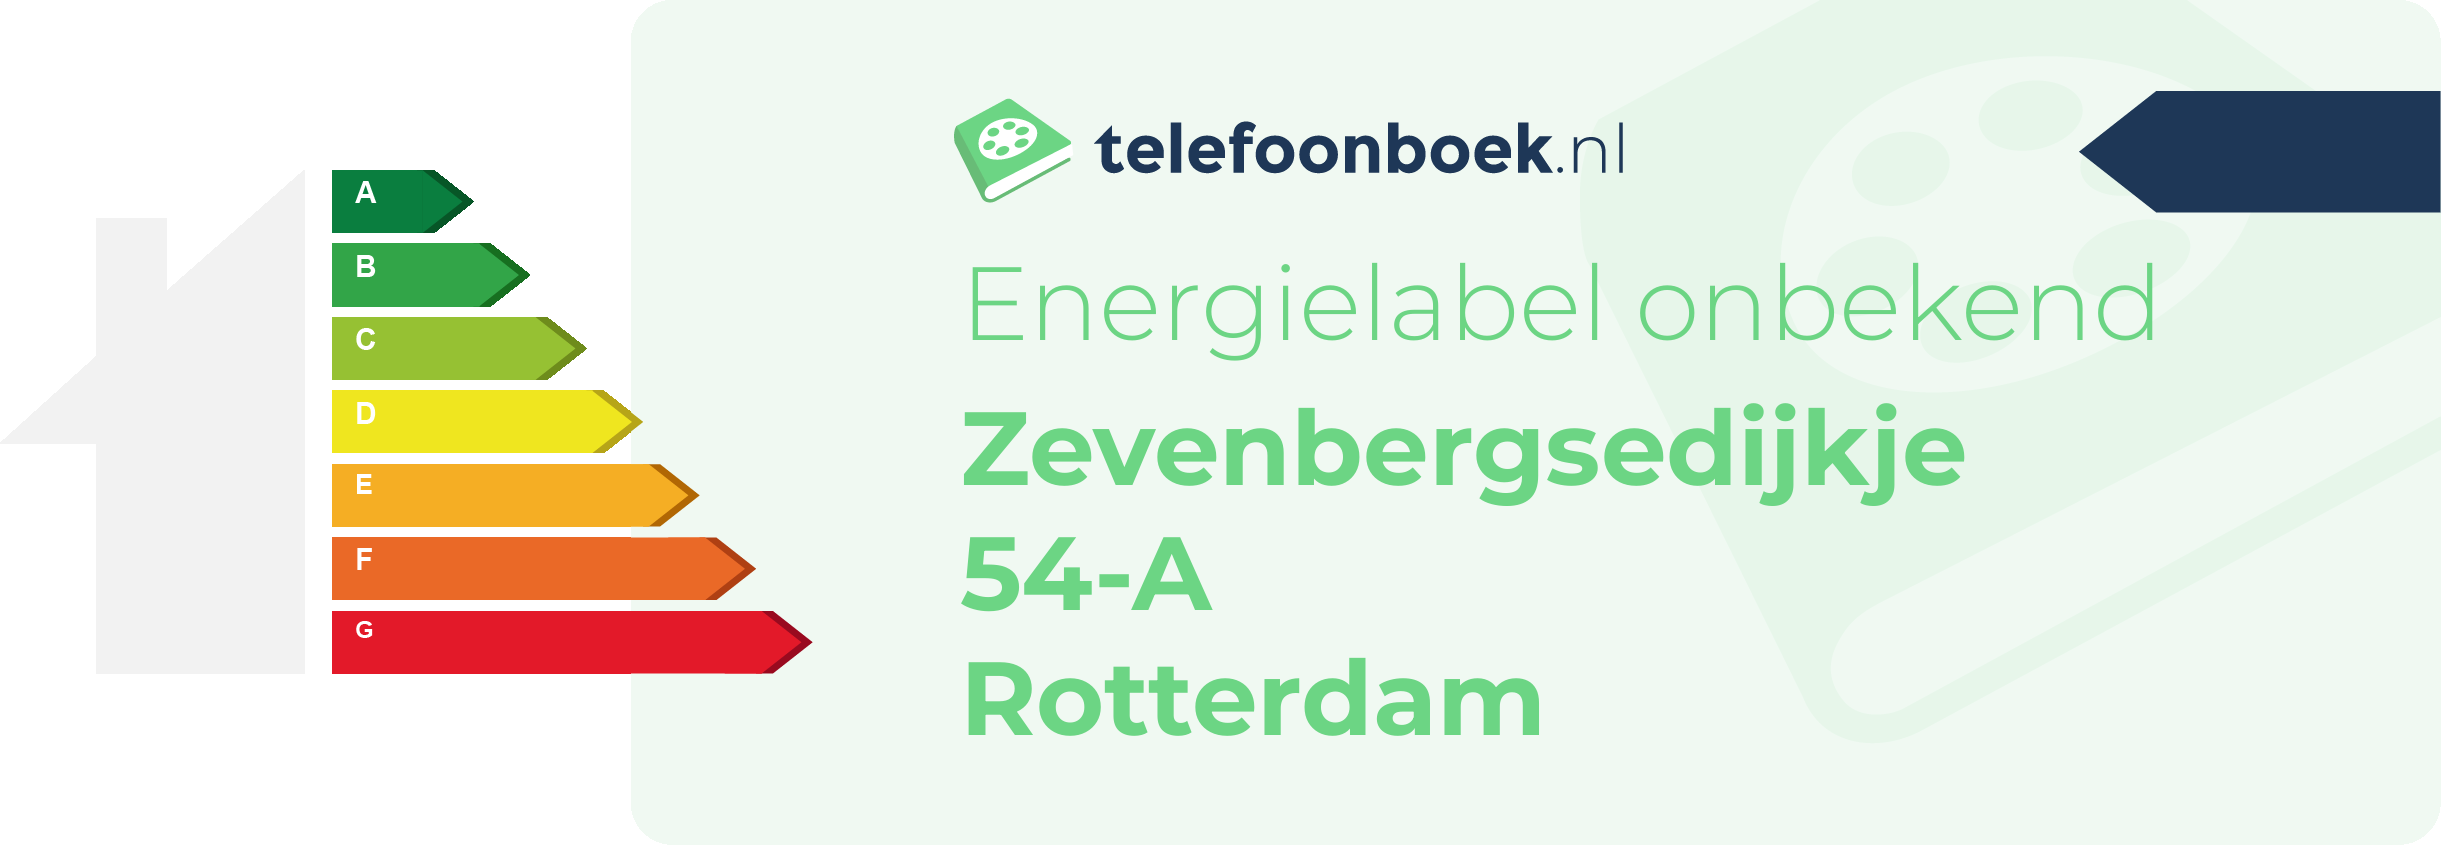 Energielabel Zevenbergsedijkje 54-A Rotterdam